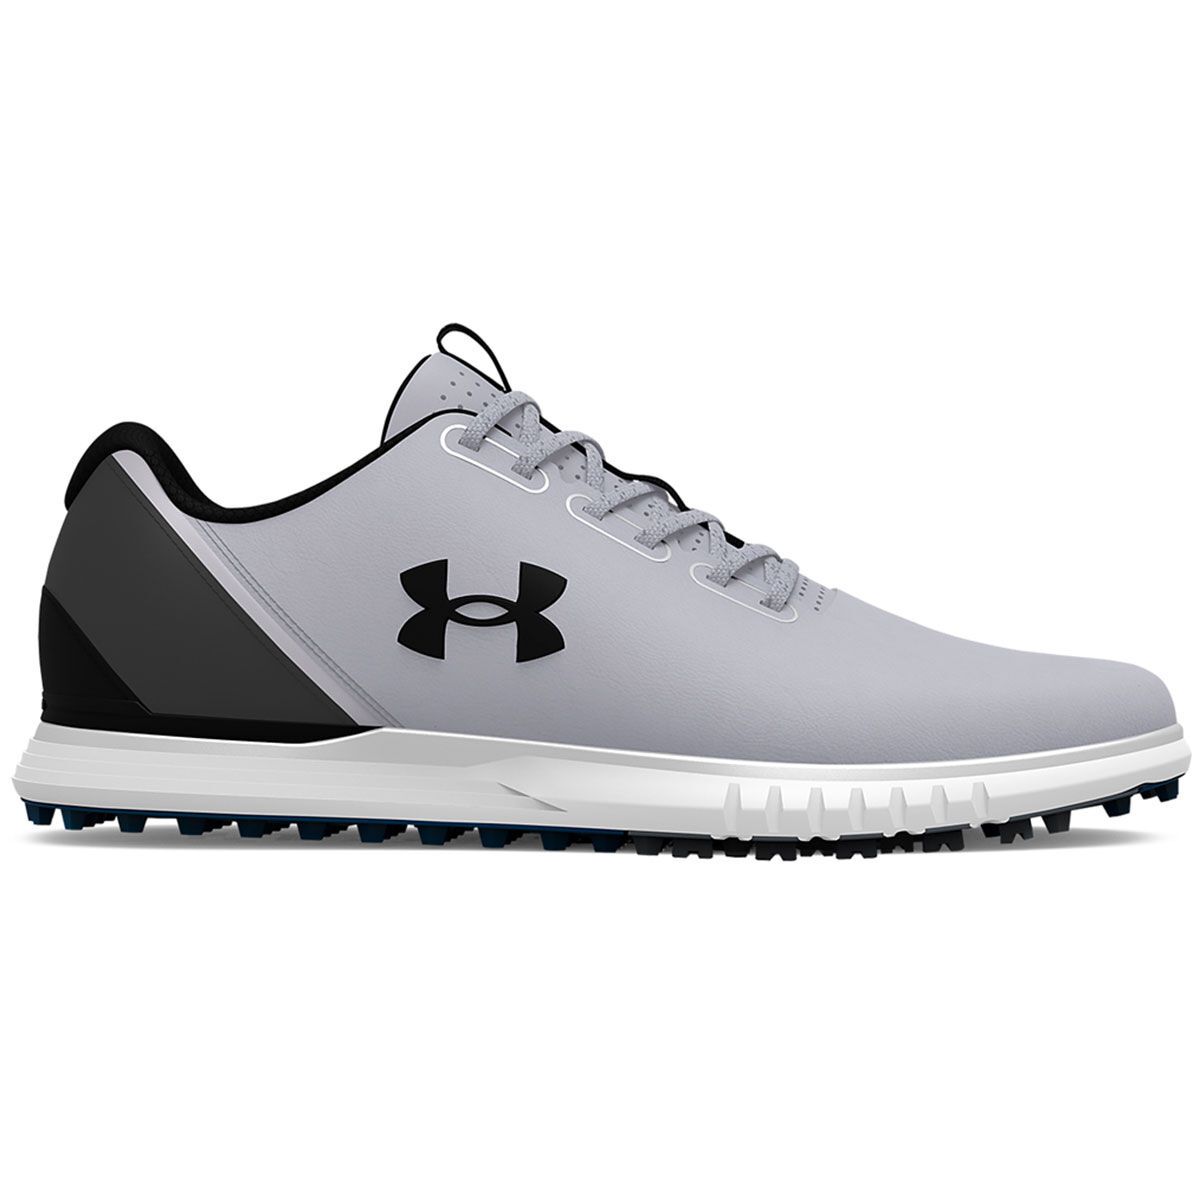 Under Armour Men’s Medal Waterproof Spikeless Golf Shoes, Mens, Mod gray/jet gray/black, 8 | American Golf